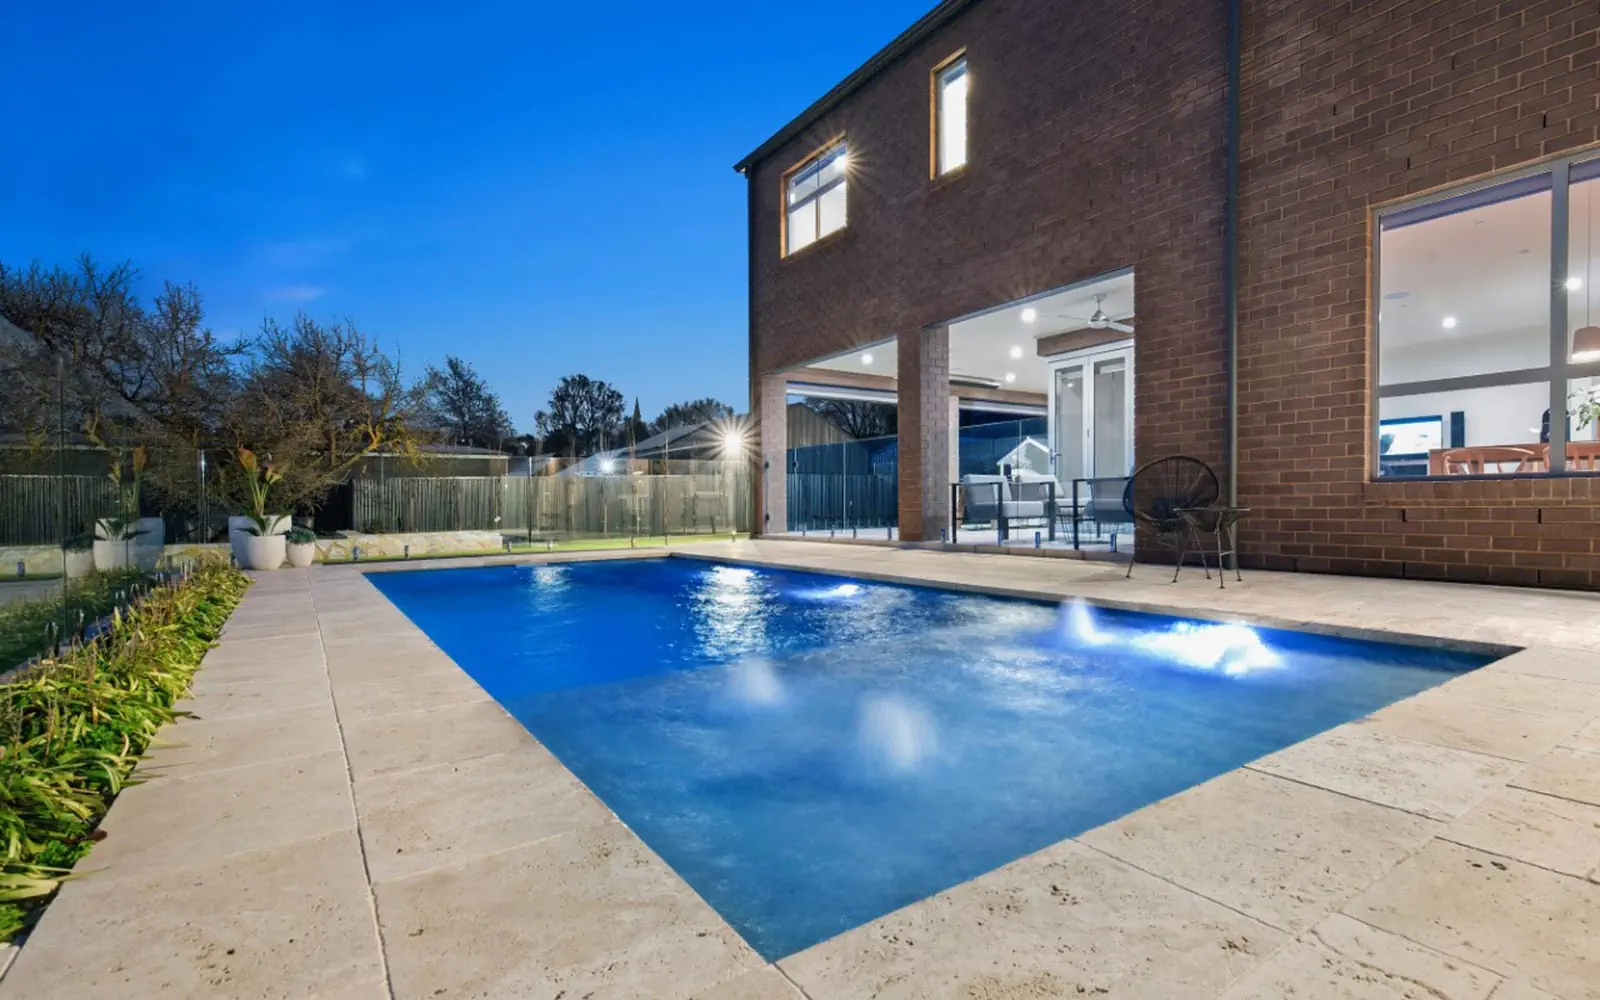 Leisure Pools Reflection fibreglass swimming pool with splash deck